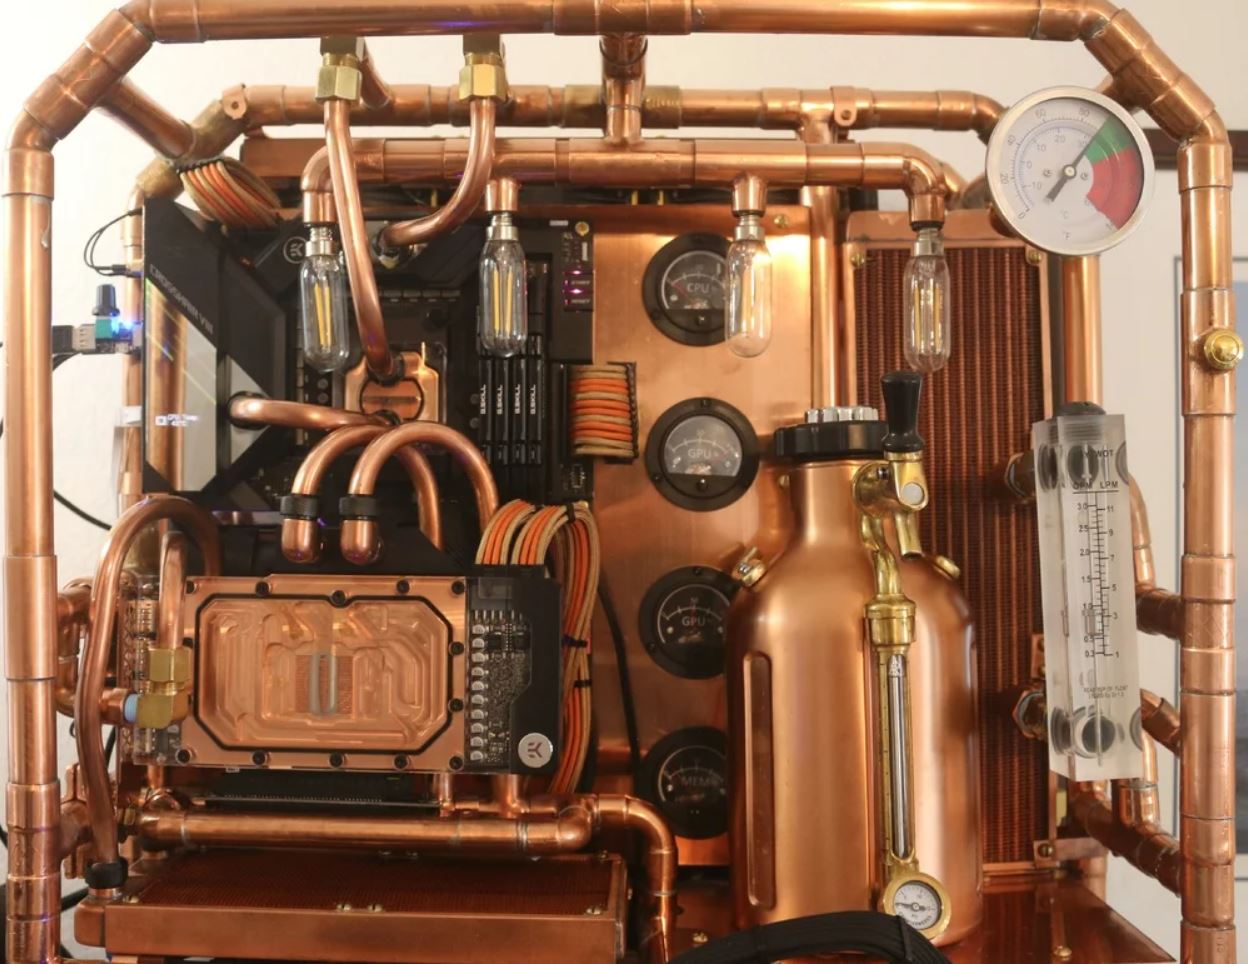 Copper keg used as coolant reservoir in custom liquid-cooled PC